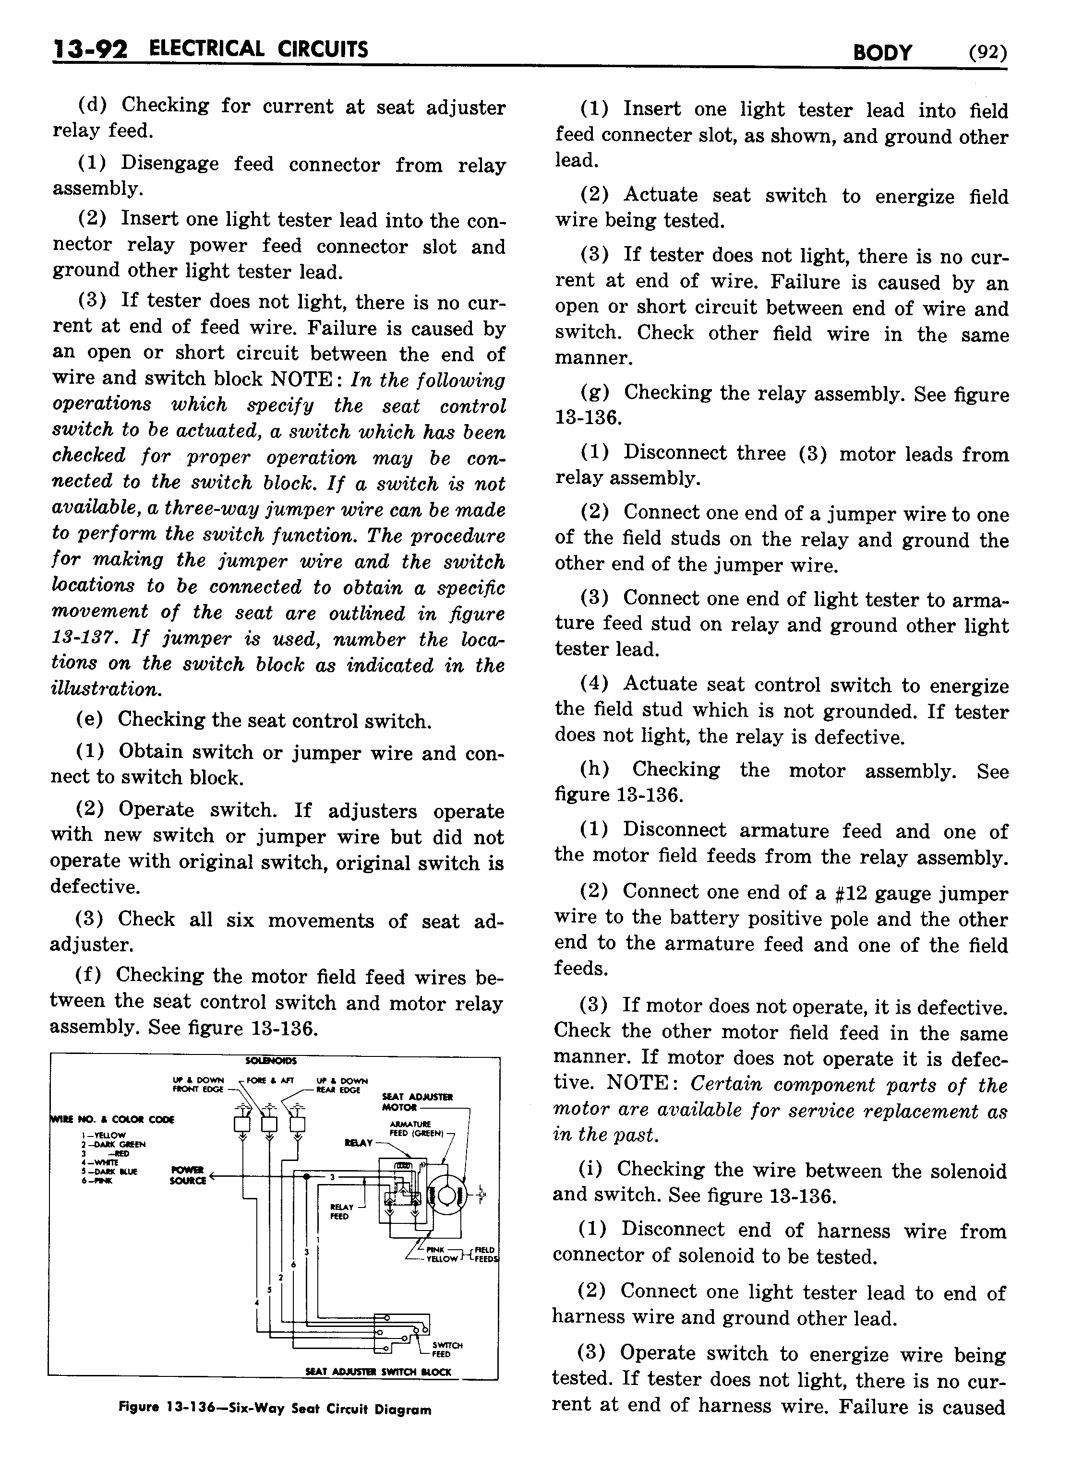 n_1957 Buick Body Service Manual-094-094.jpg